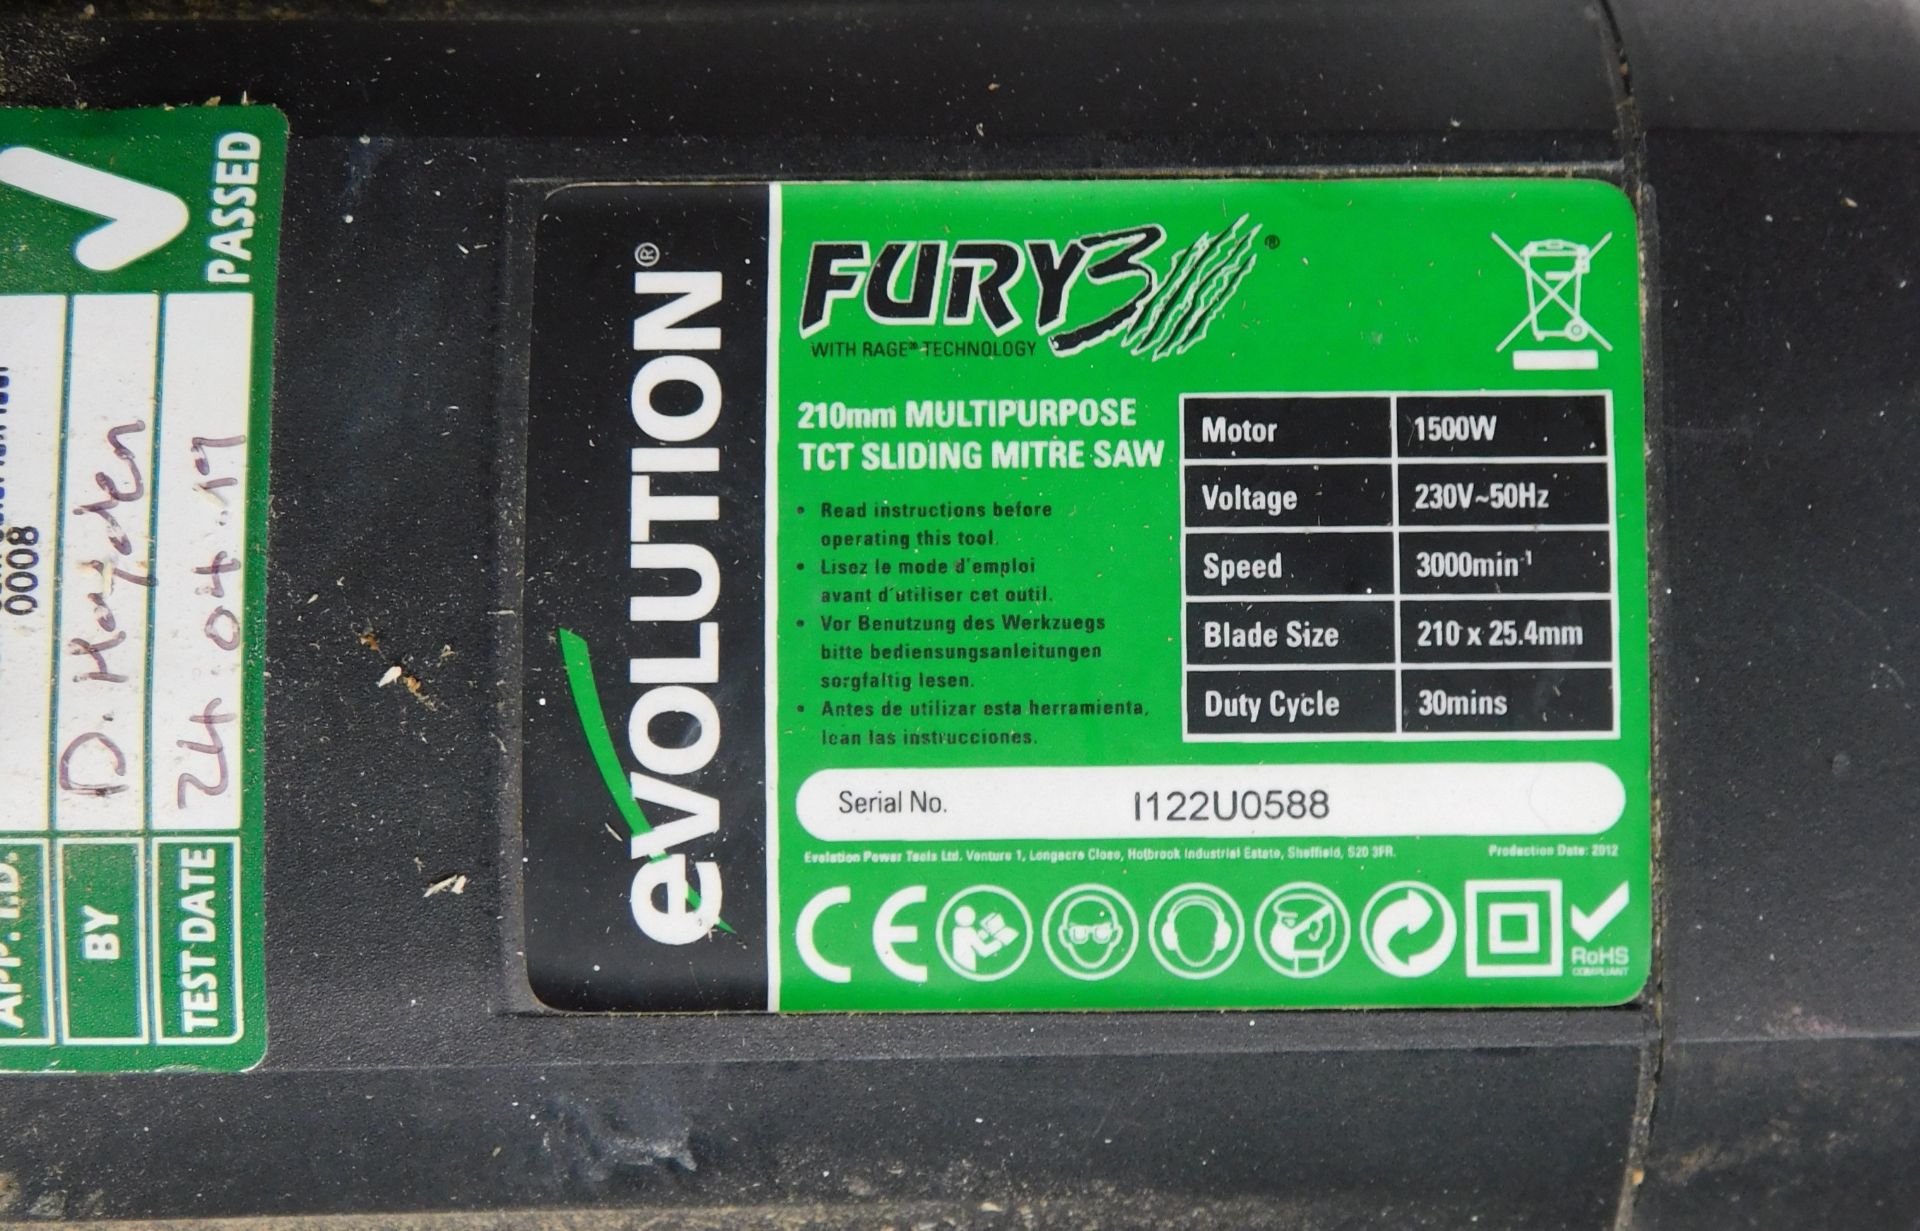 Evolution Fury 3 210mm TCT Multipurpose Sliding Mitre Saw 240v (Located: Brentwood. Please Refer - Image 3 of 3